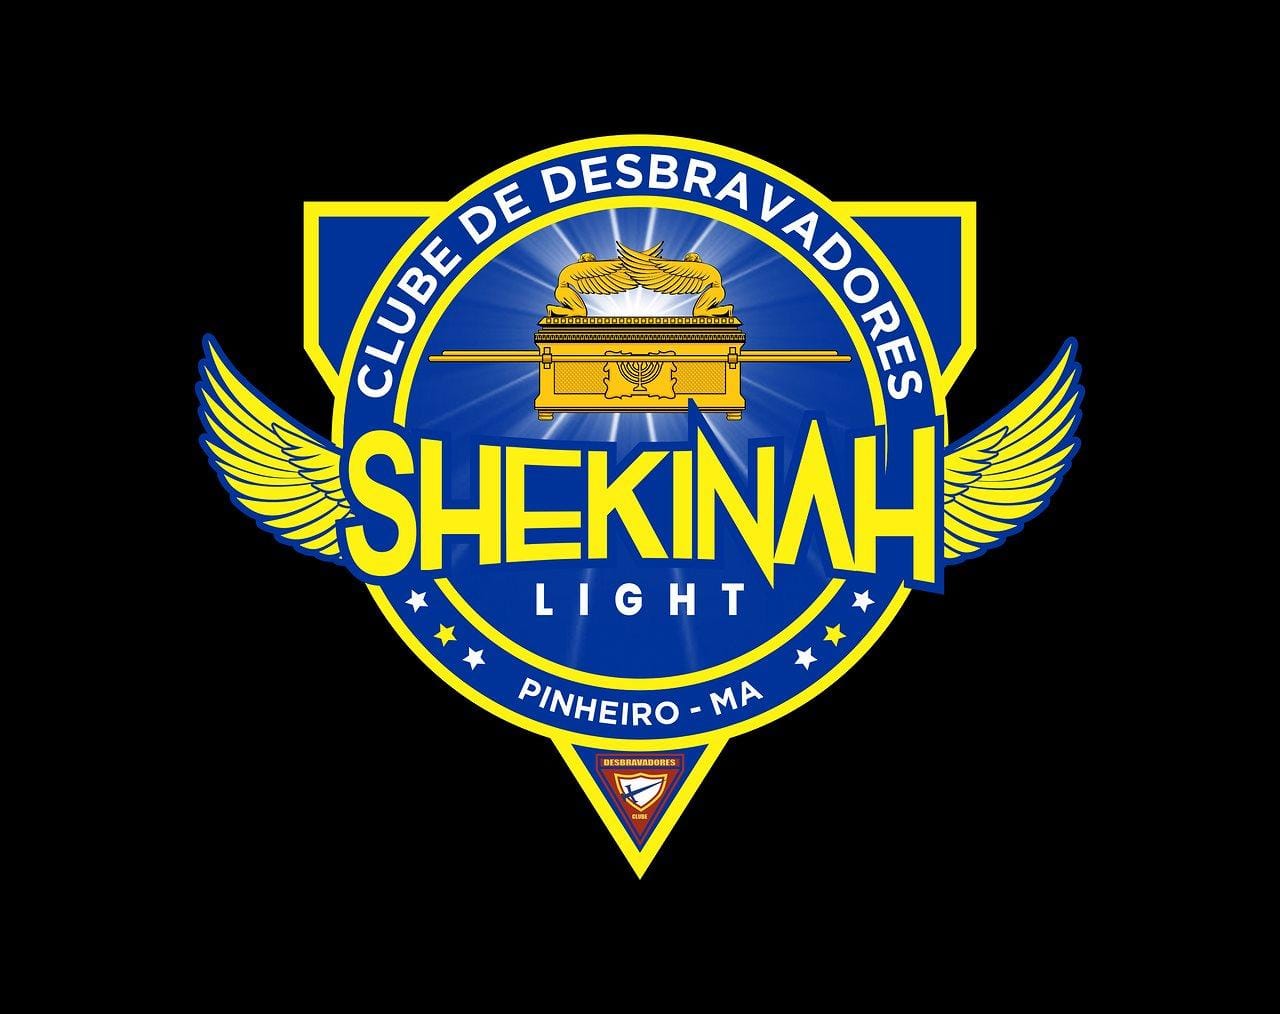 SHEKINAH LIGHT